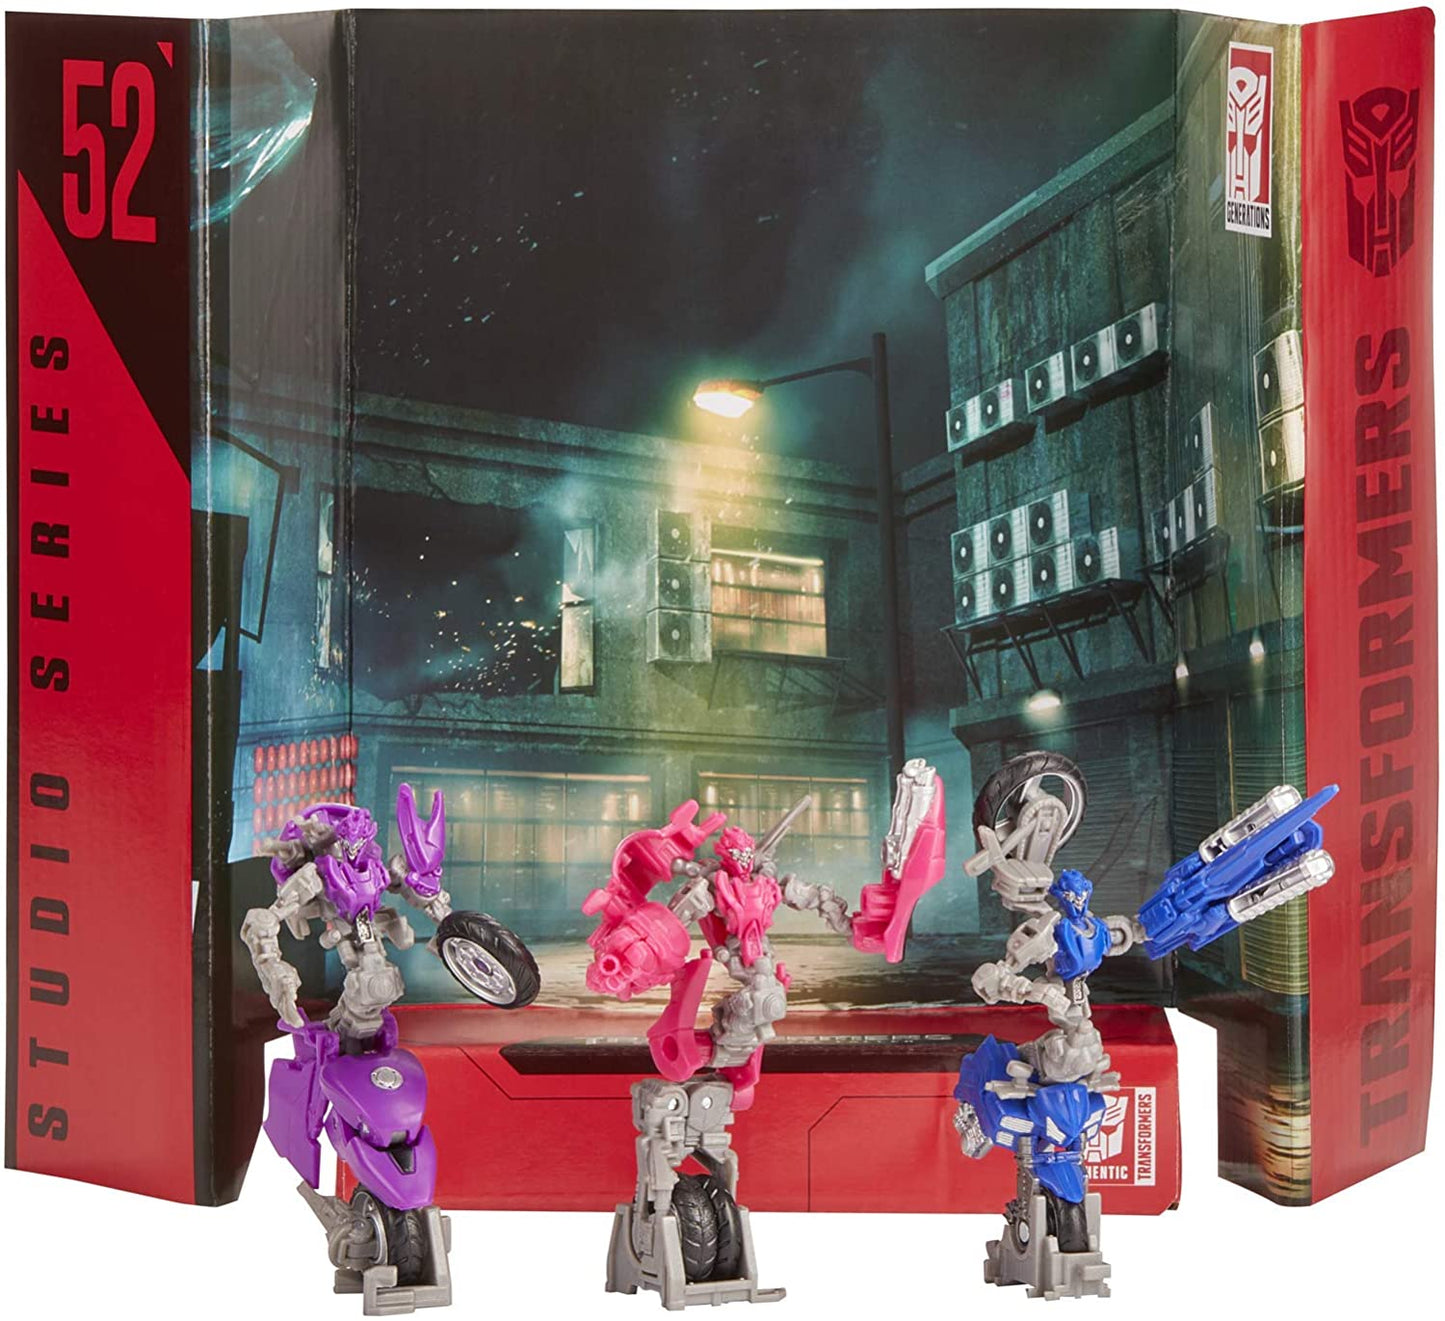 Transformers Toys Studio Series 52 Deluxe Revenge of The Fallen Movie Arcee Chromia Elita-1 Action Figure 3 Pack, 4.5"